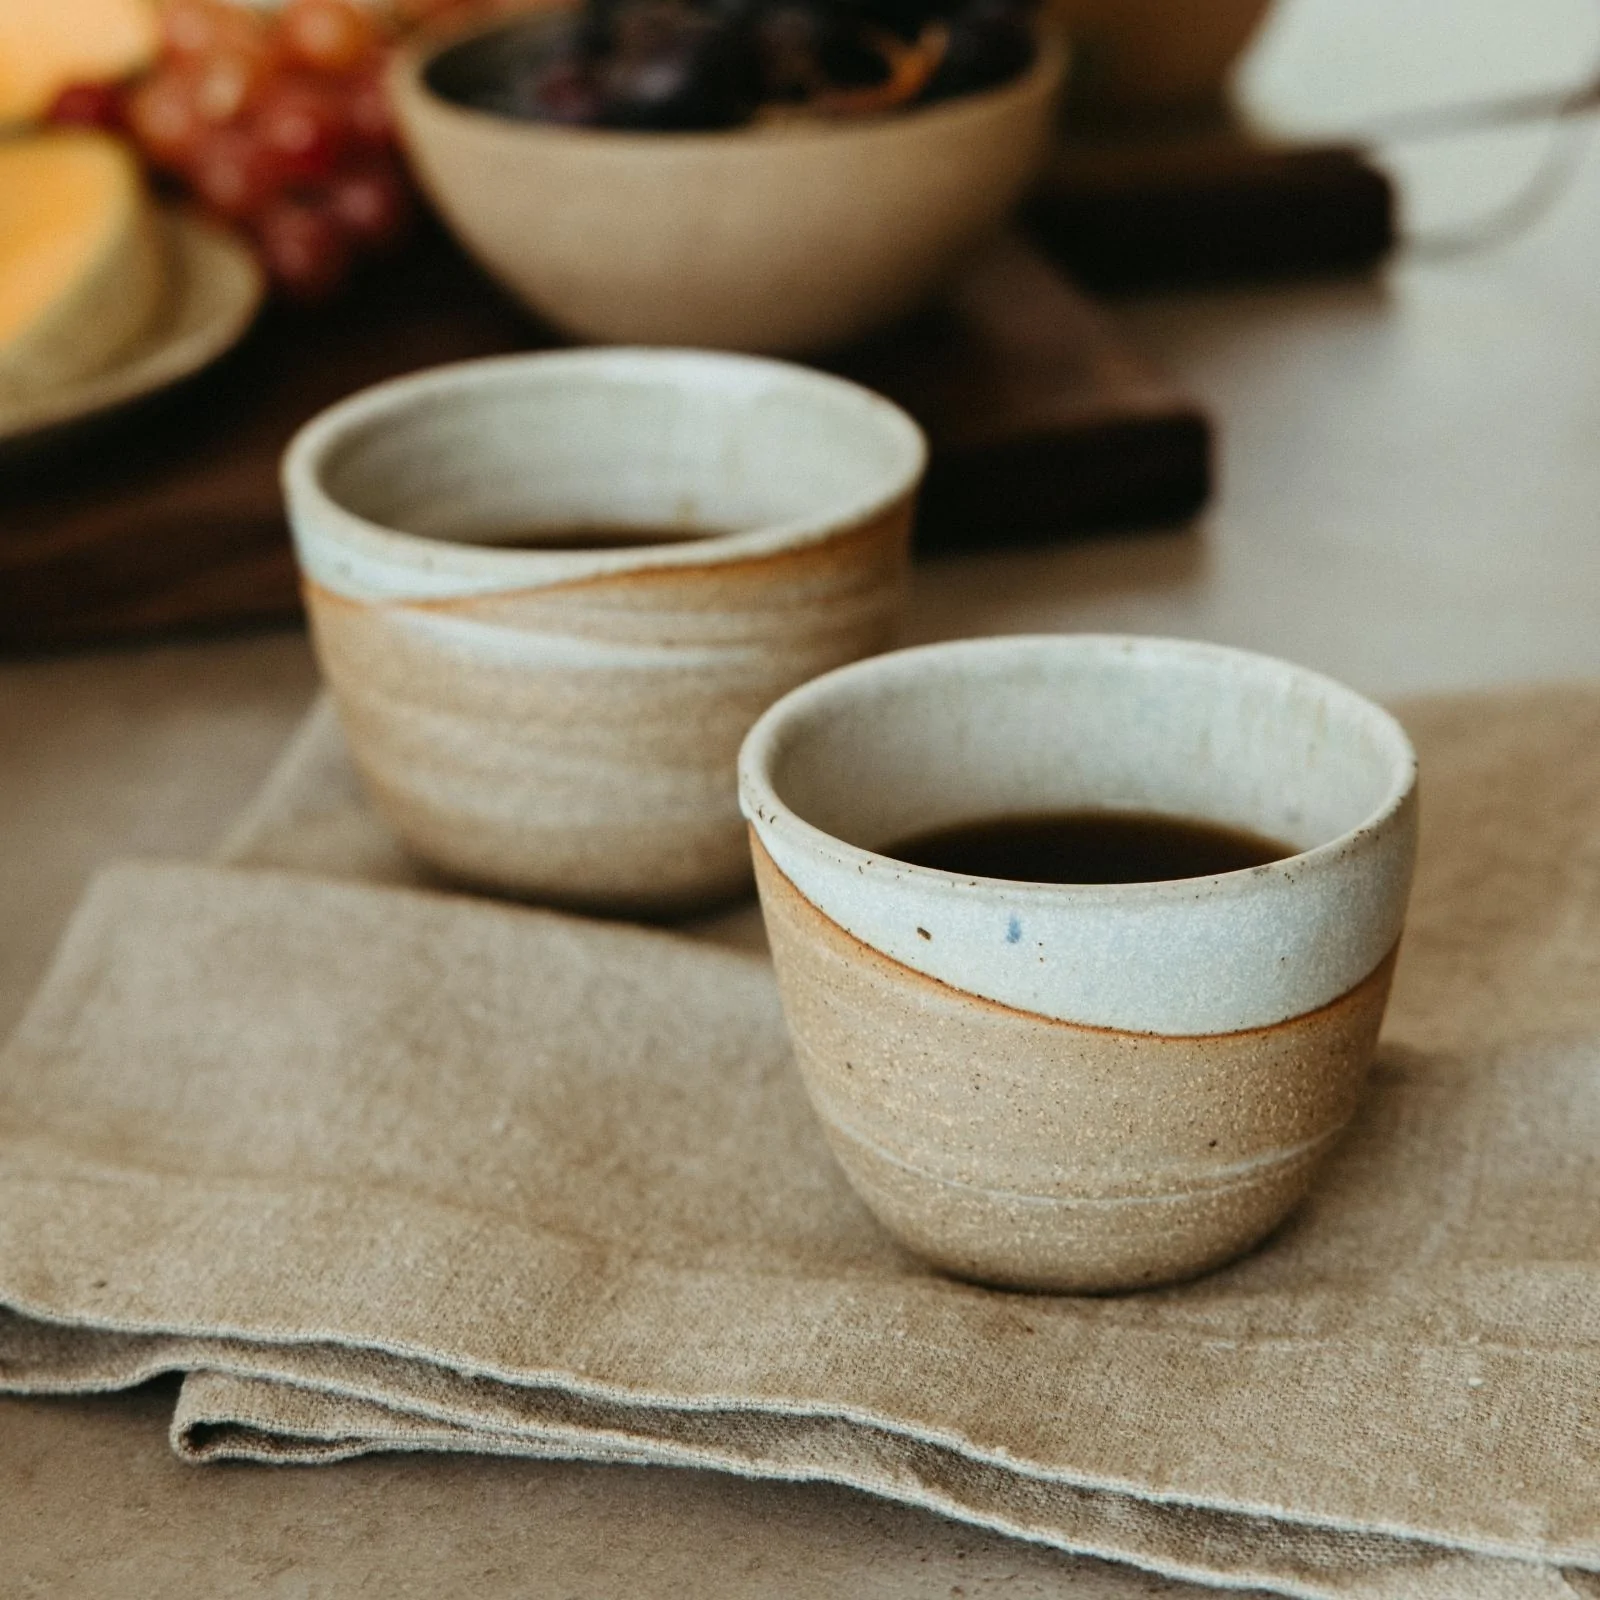 ritual mug-handmade stoneware mug